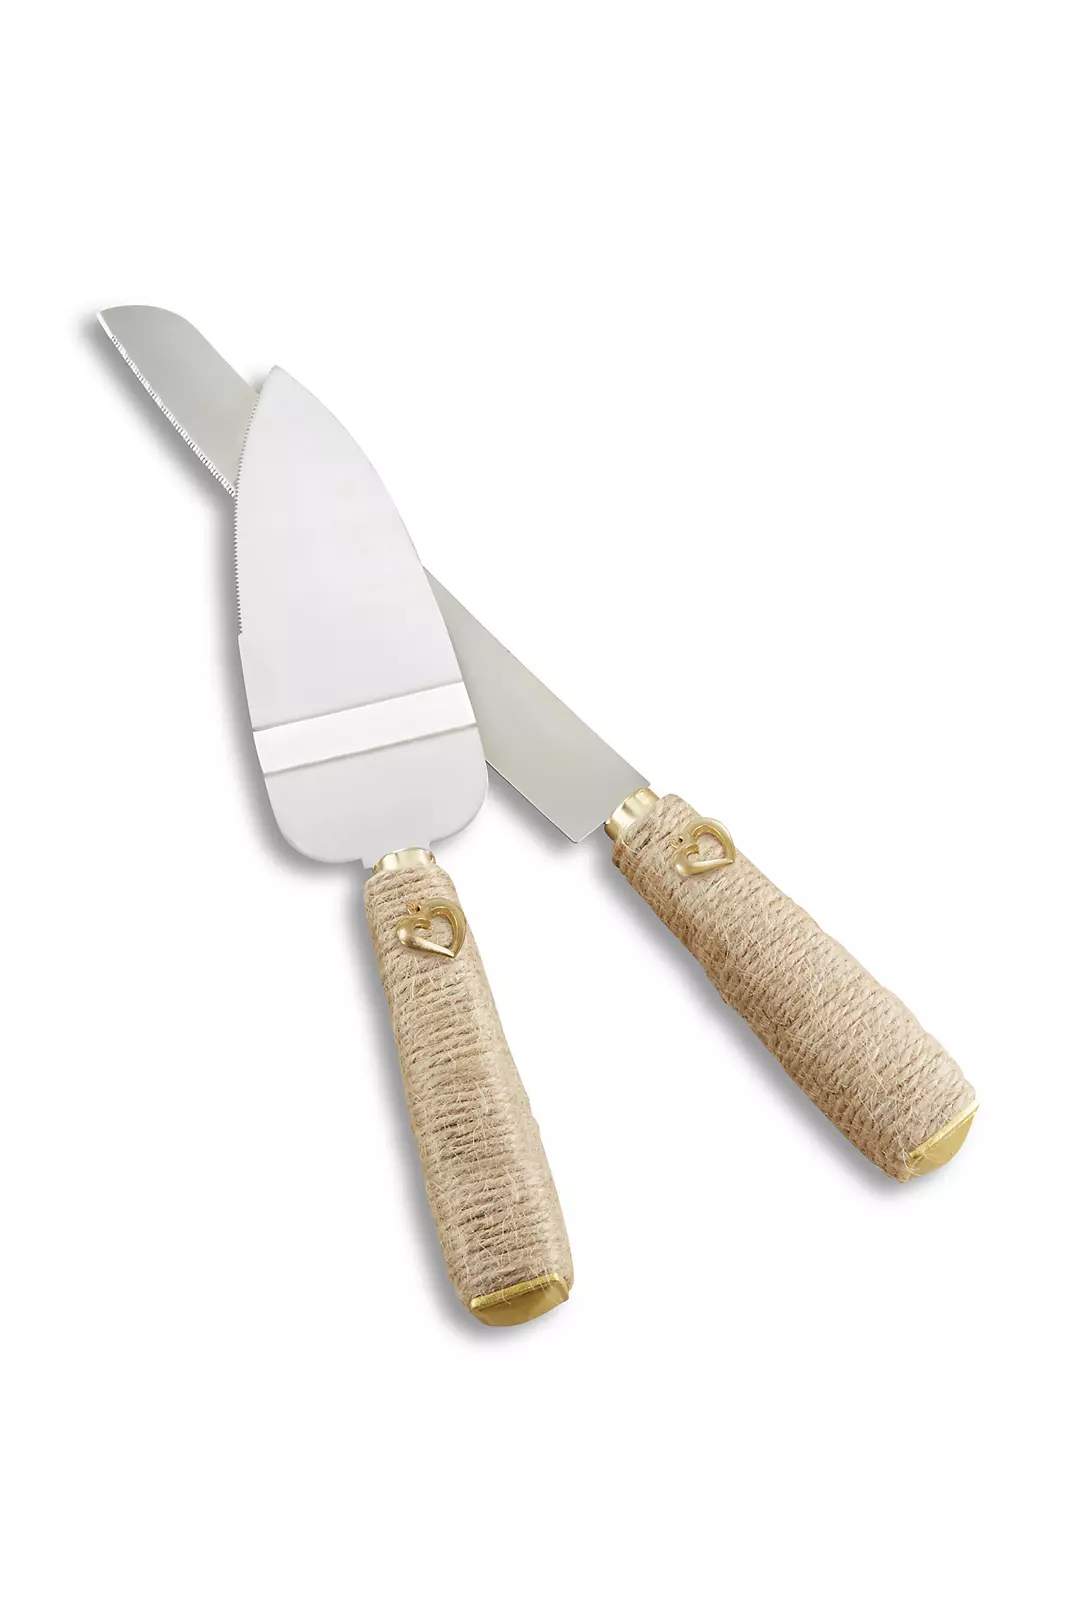 My Favorite Spatula and Knife Set - Serving Knife - Walter Drake